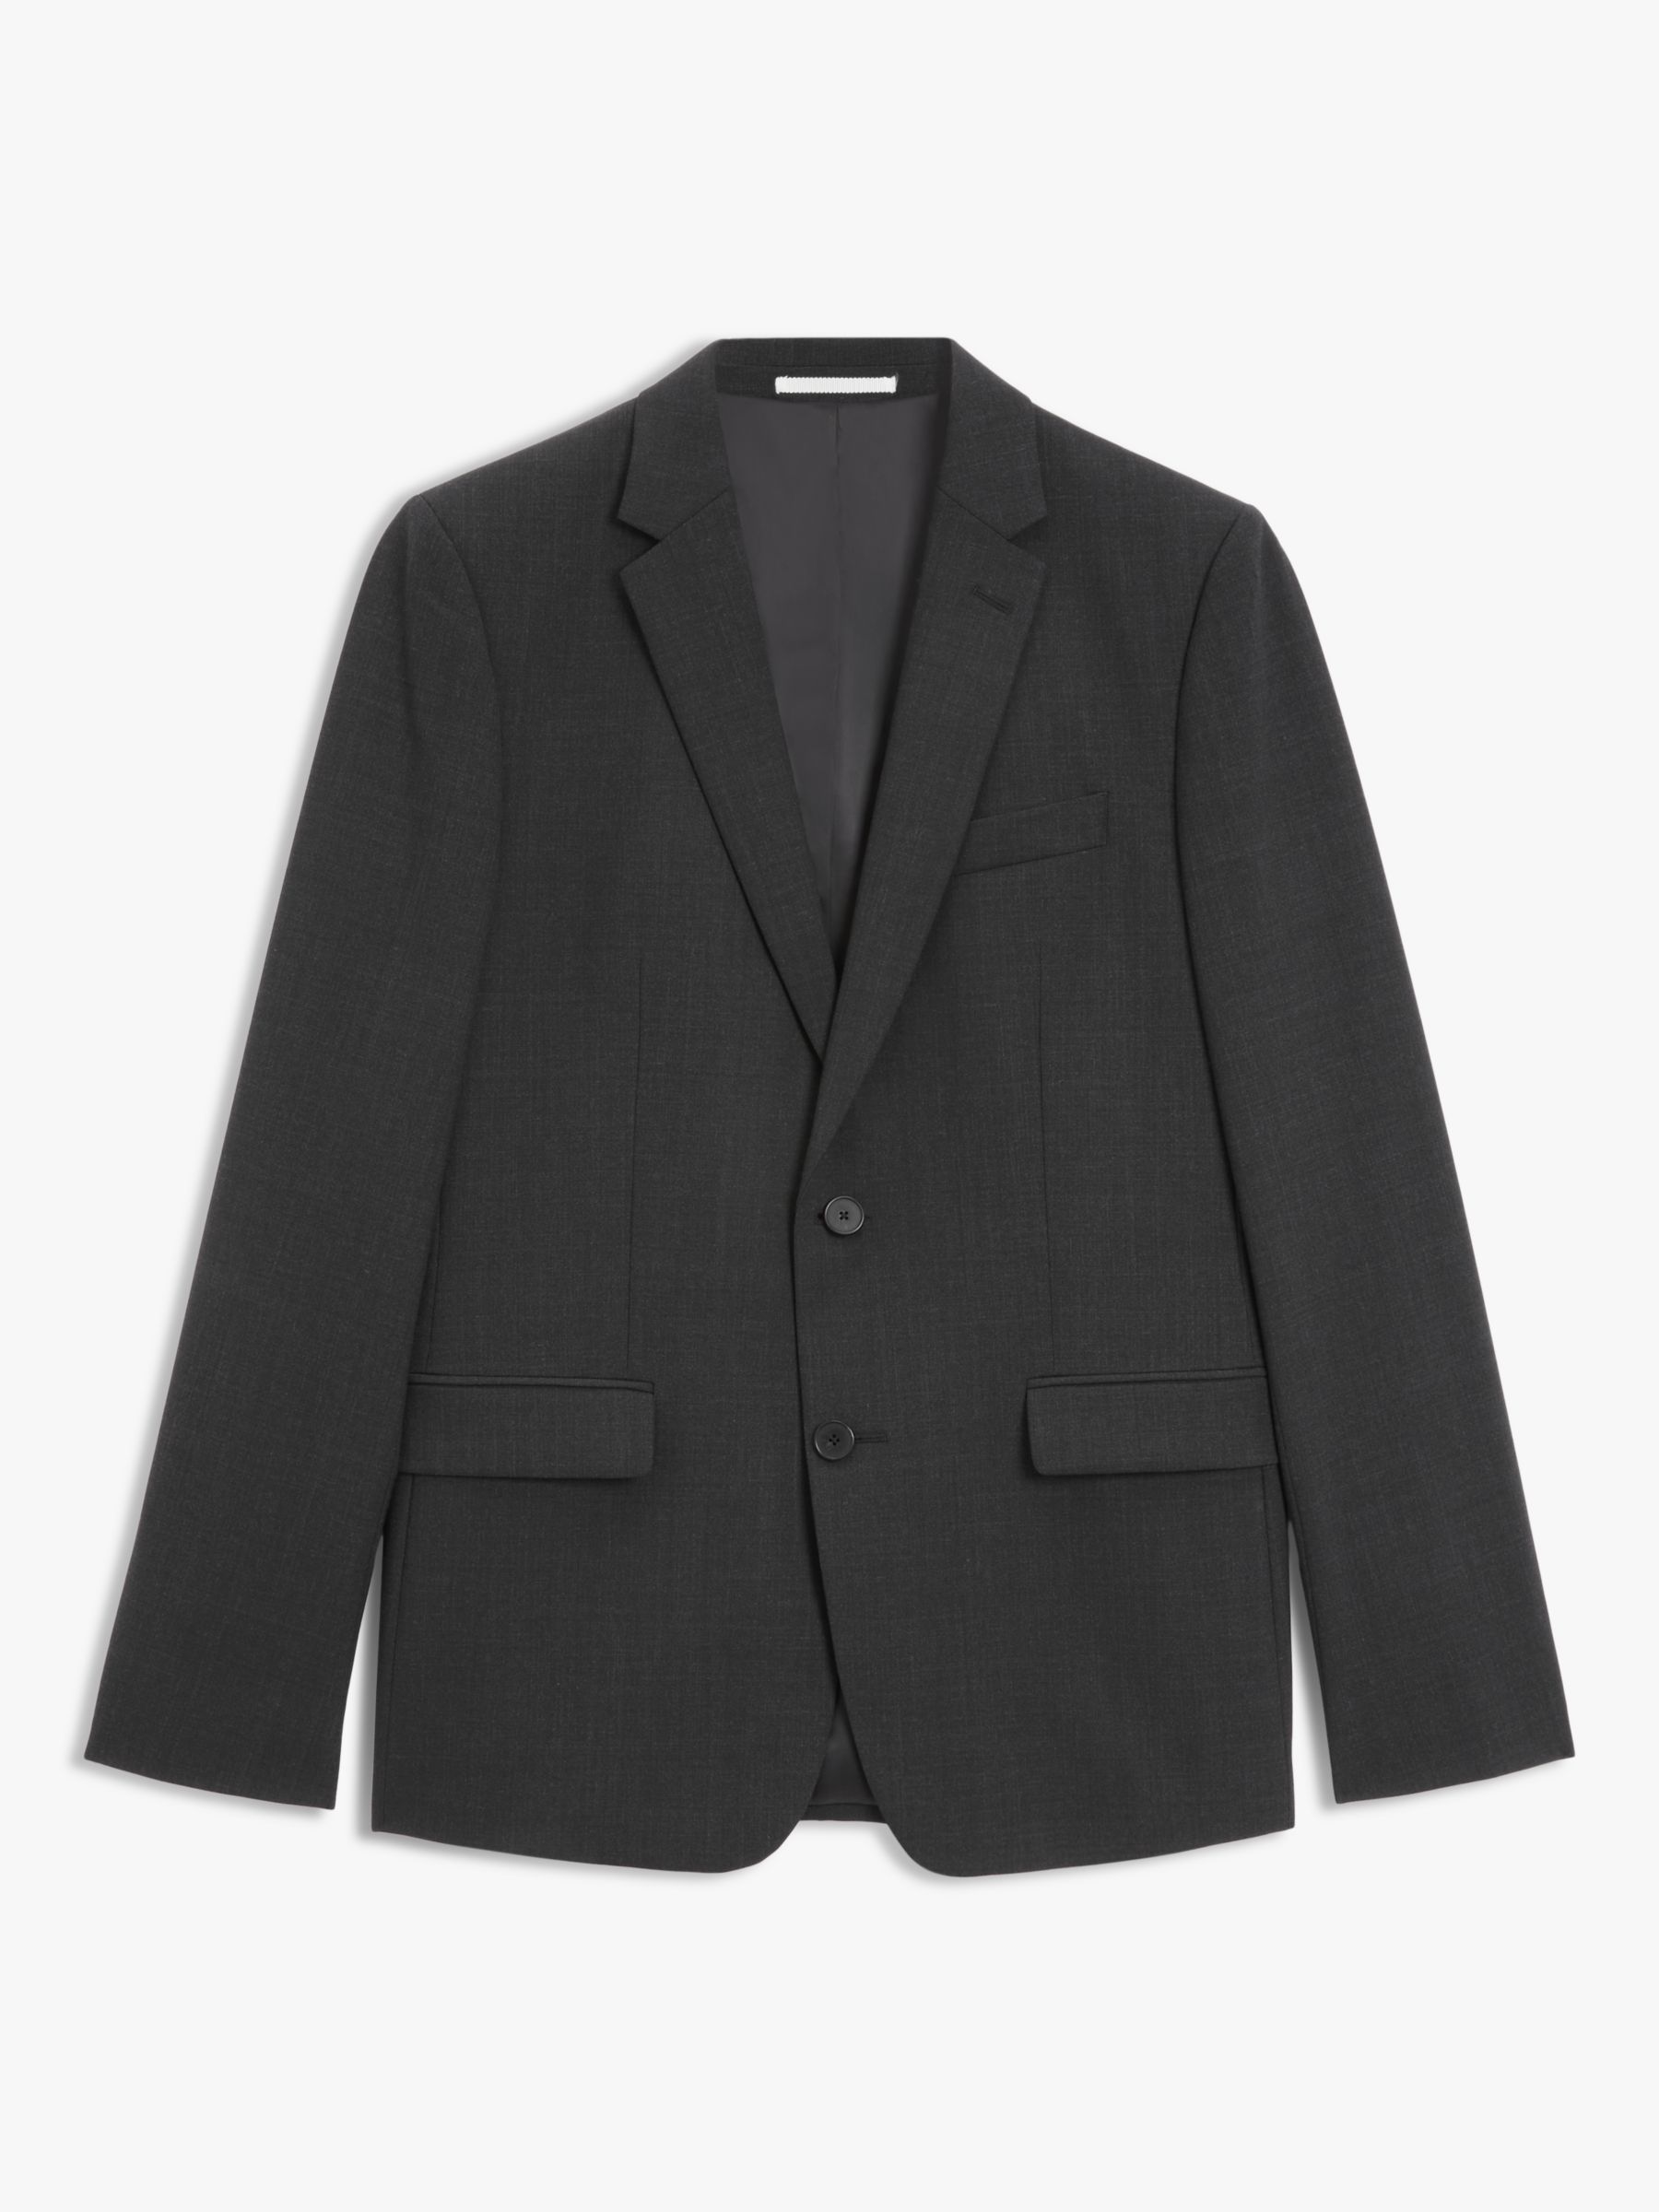 Kin Wool Blend Slim Fit Notch Lapel Suit Jacket, Charcoal at John Lewis ...